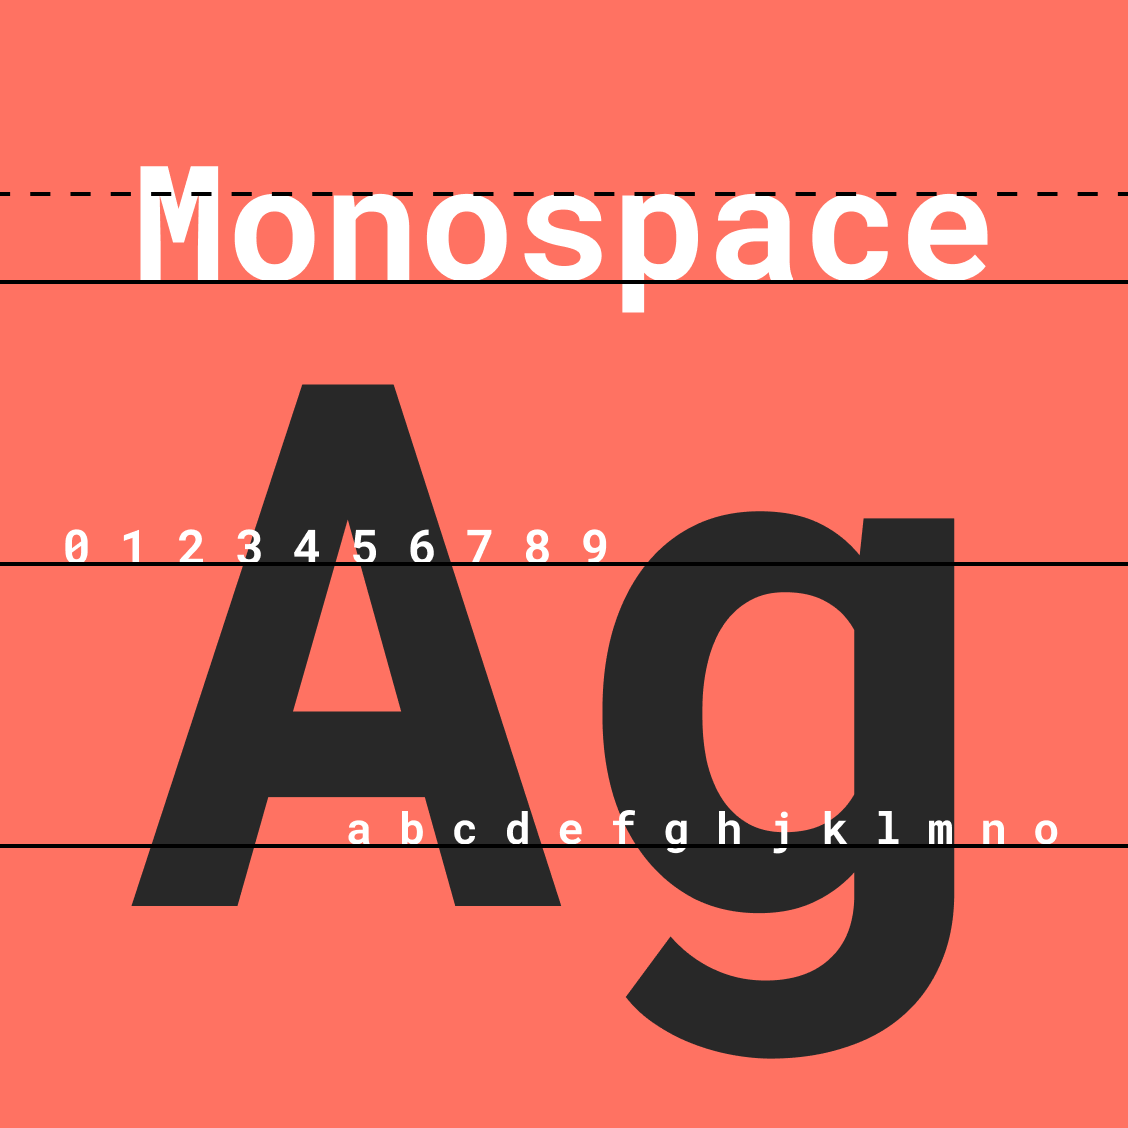 monospace pro text editor